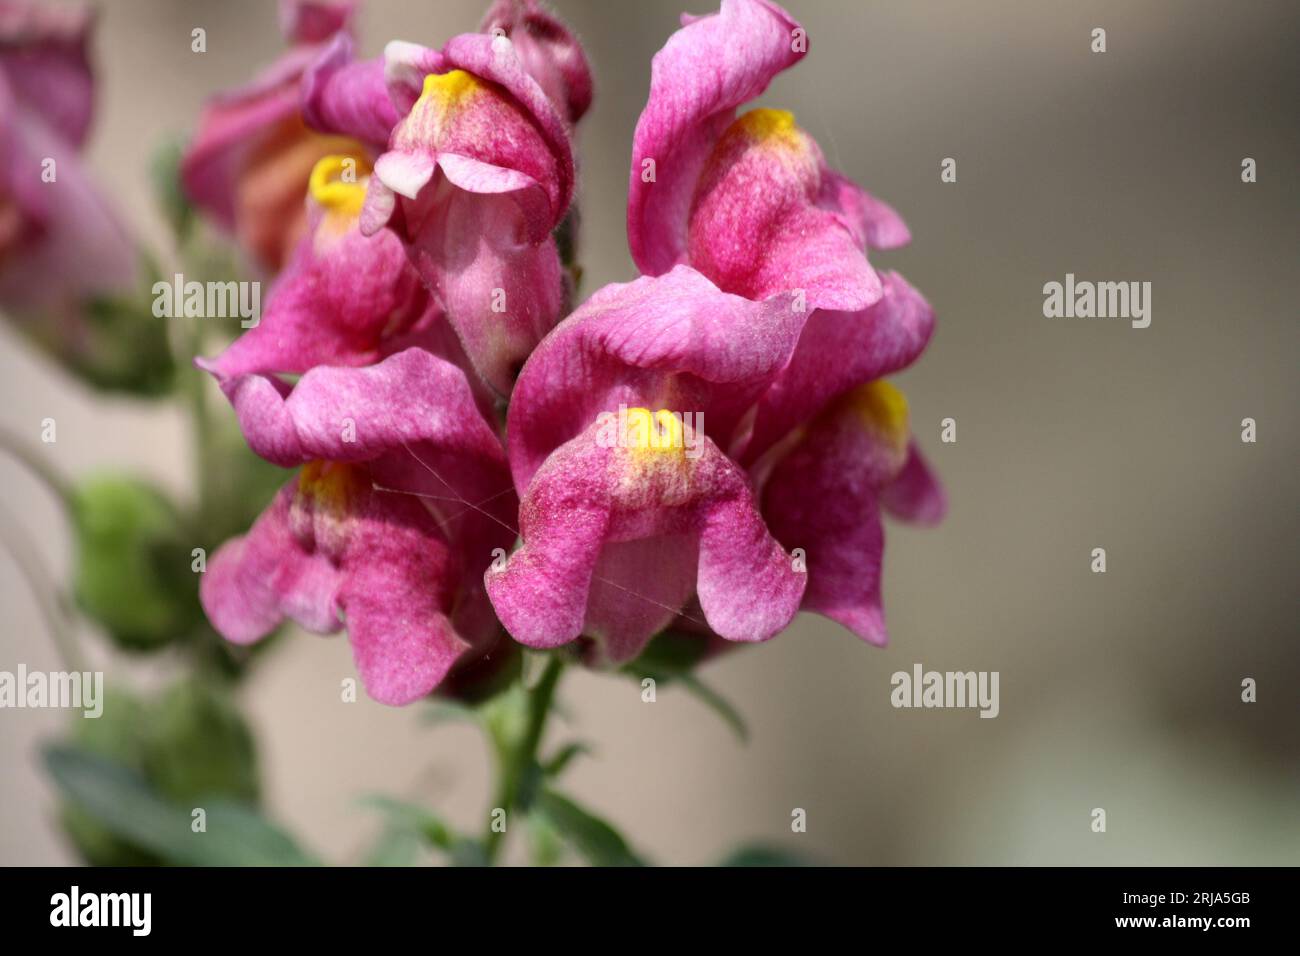 Snapdragon flowers (Antirrhinum majus) in pink color : (pix Sanjiv Shukla) Stock Photo